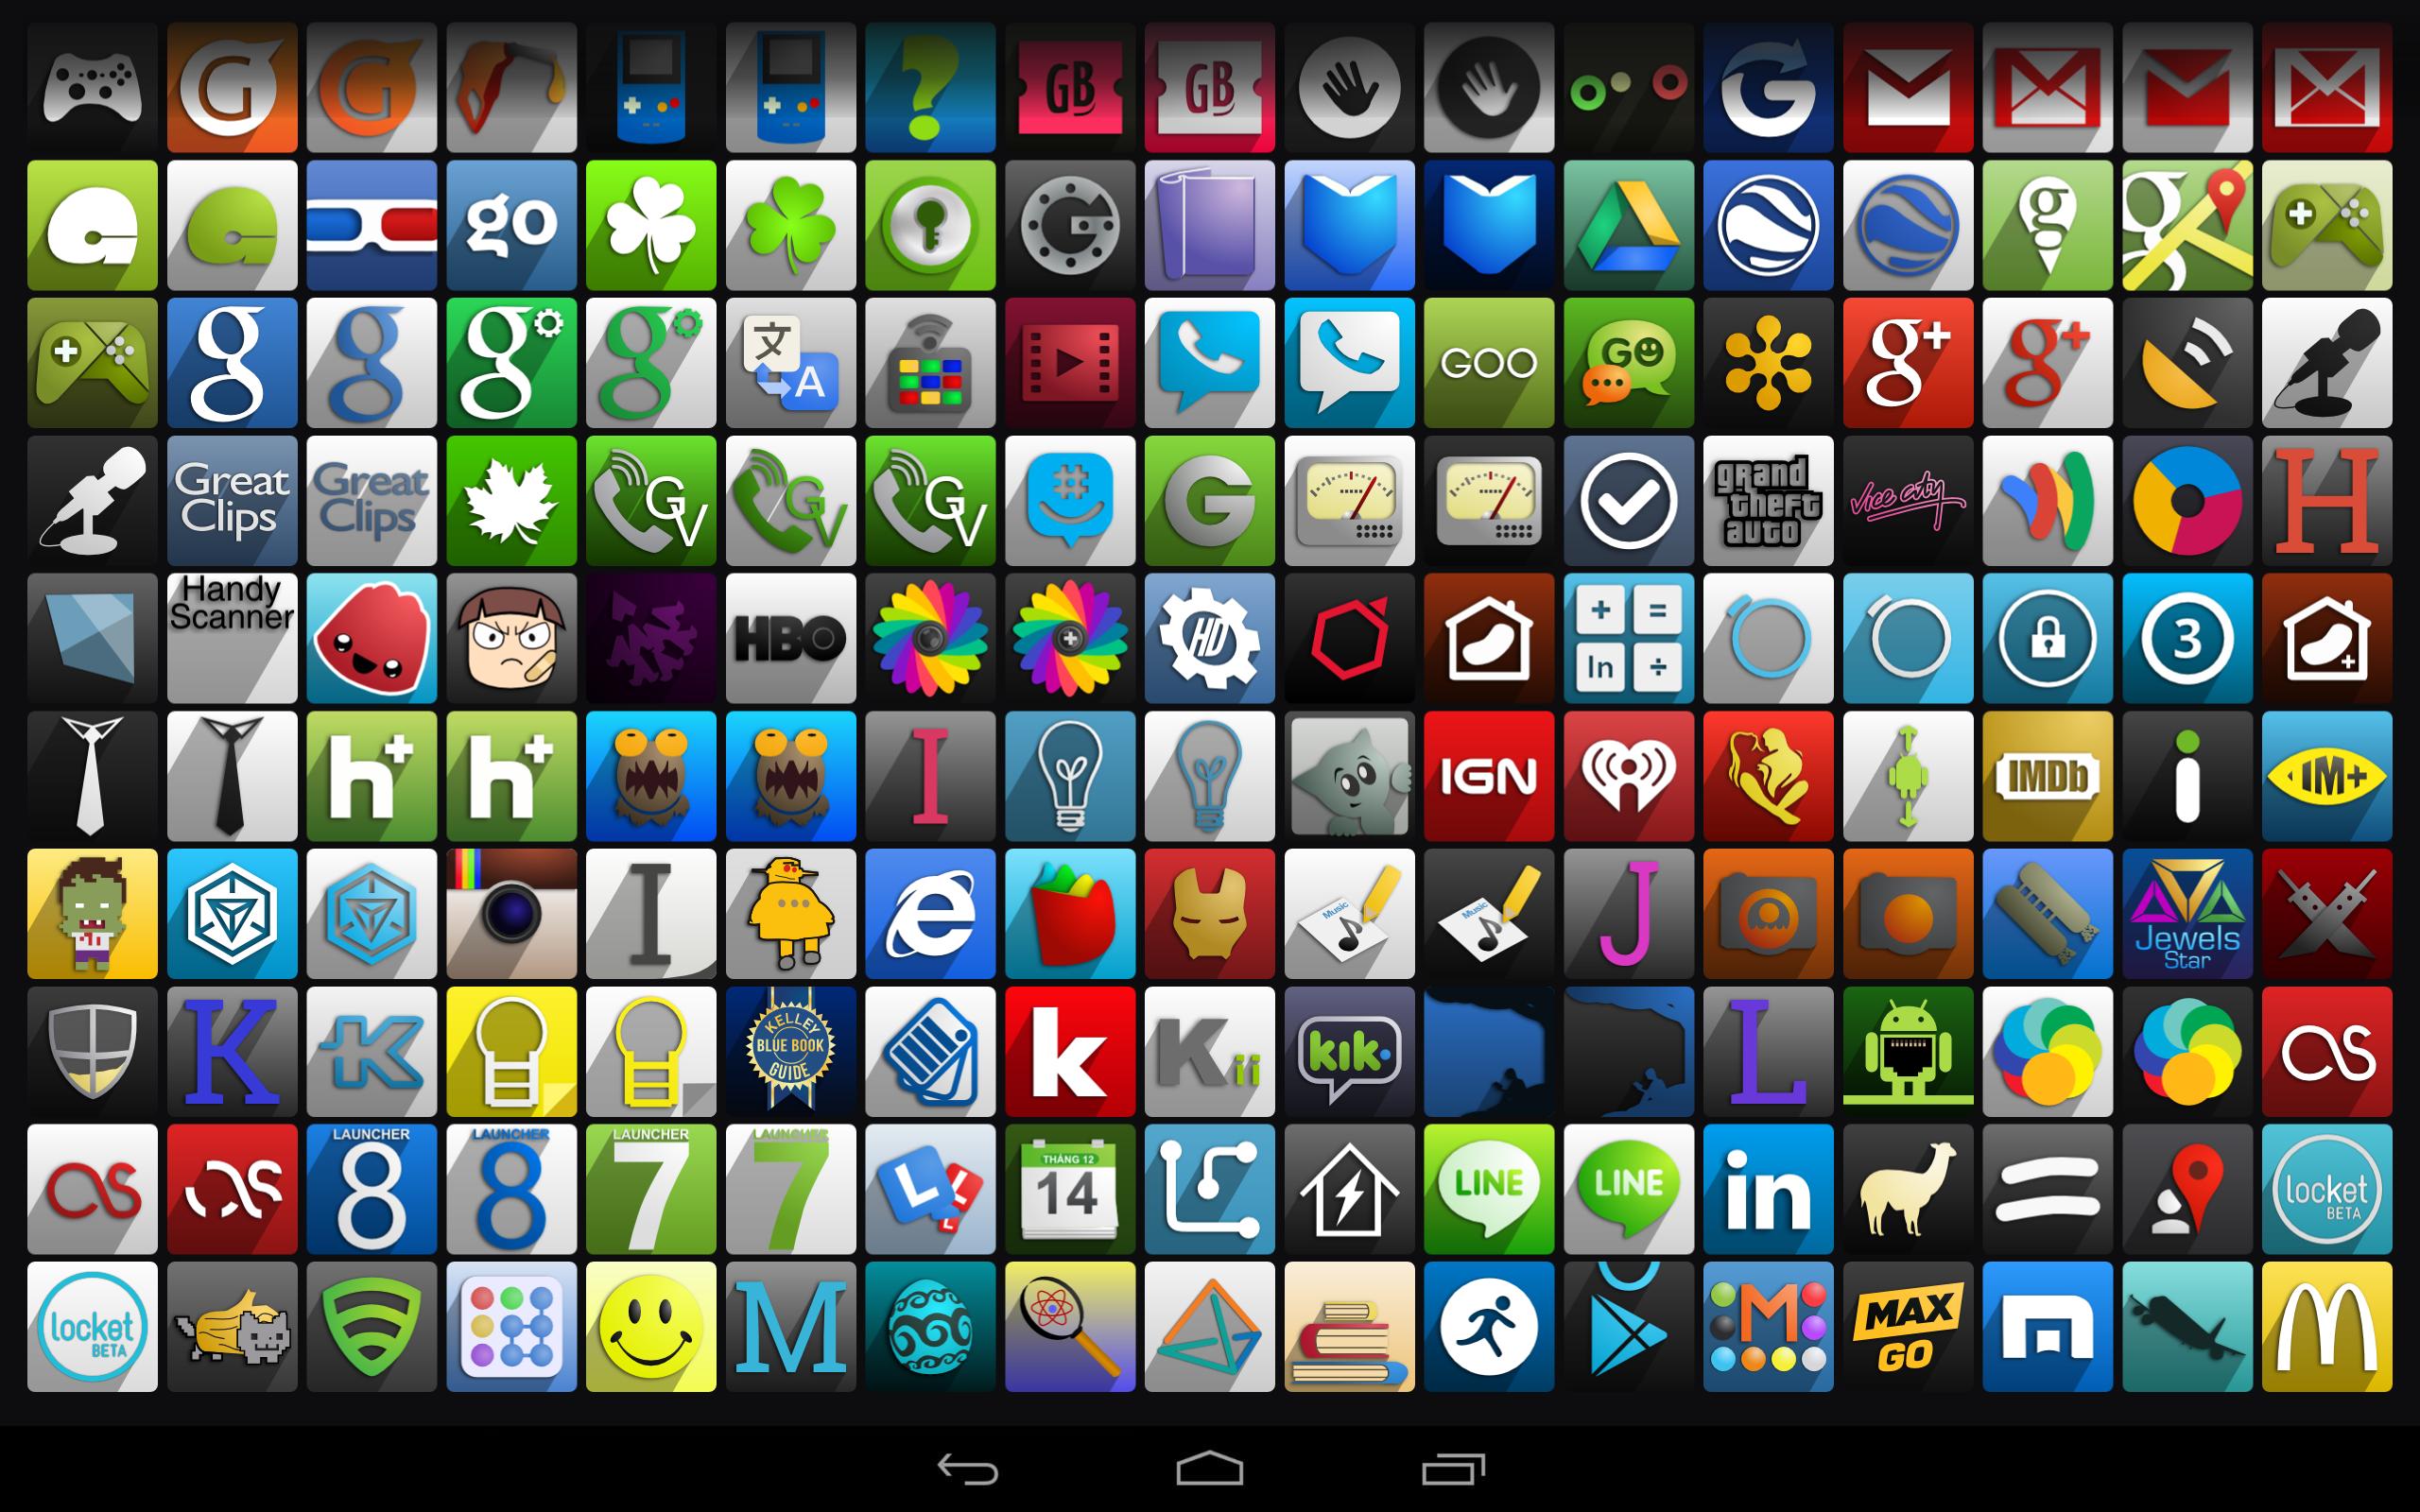 Значки на иконках андроид. Иконки приложений для андроид. Красивые иконки для приложений. Значки приложений на андроиде. Иконки для приложений Android.